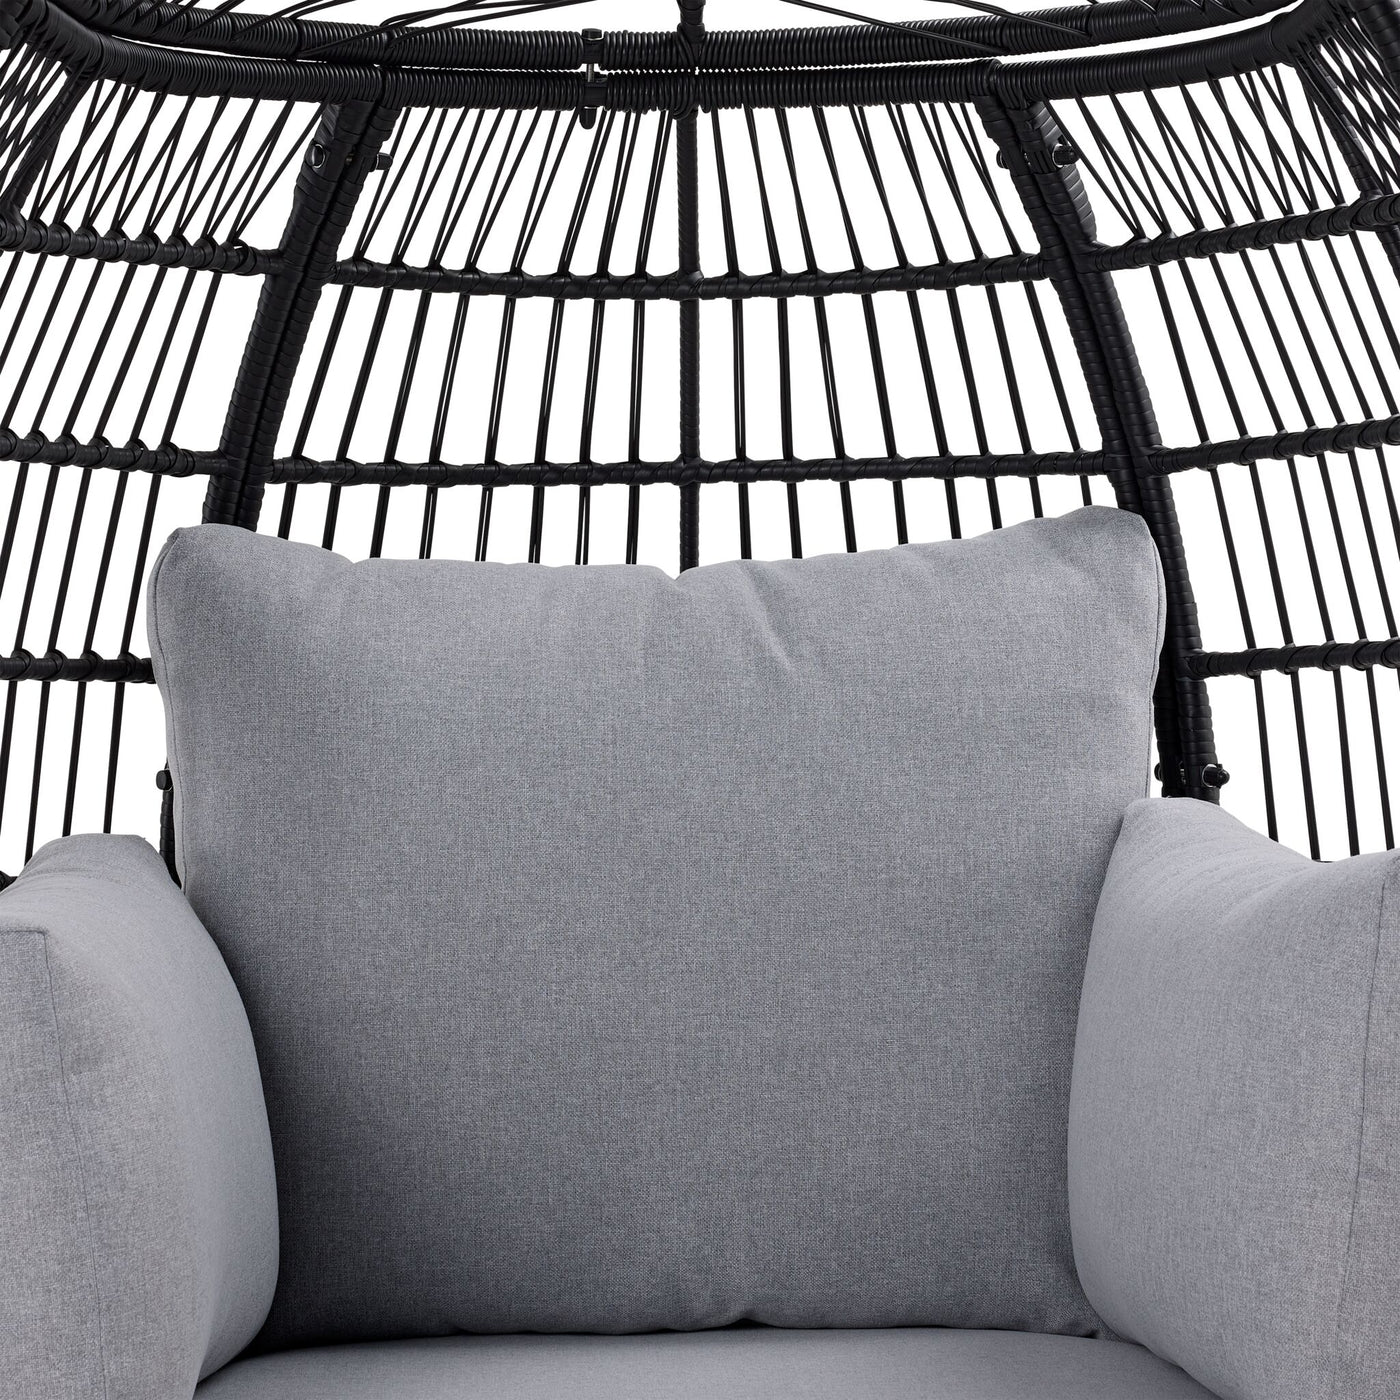 Venus Outdoor Stationary Egg Chair - Black, Grey